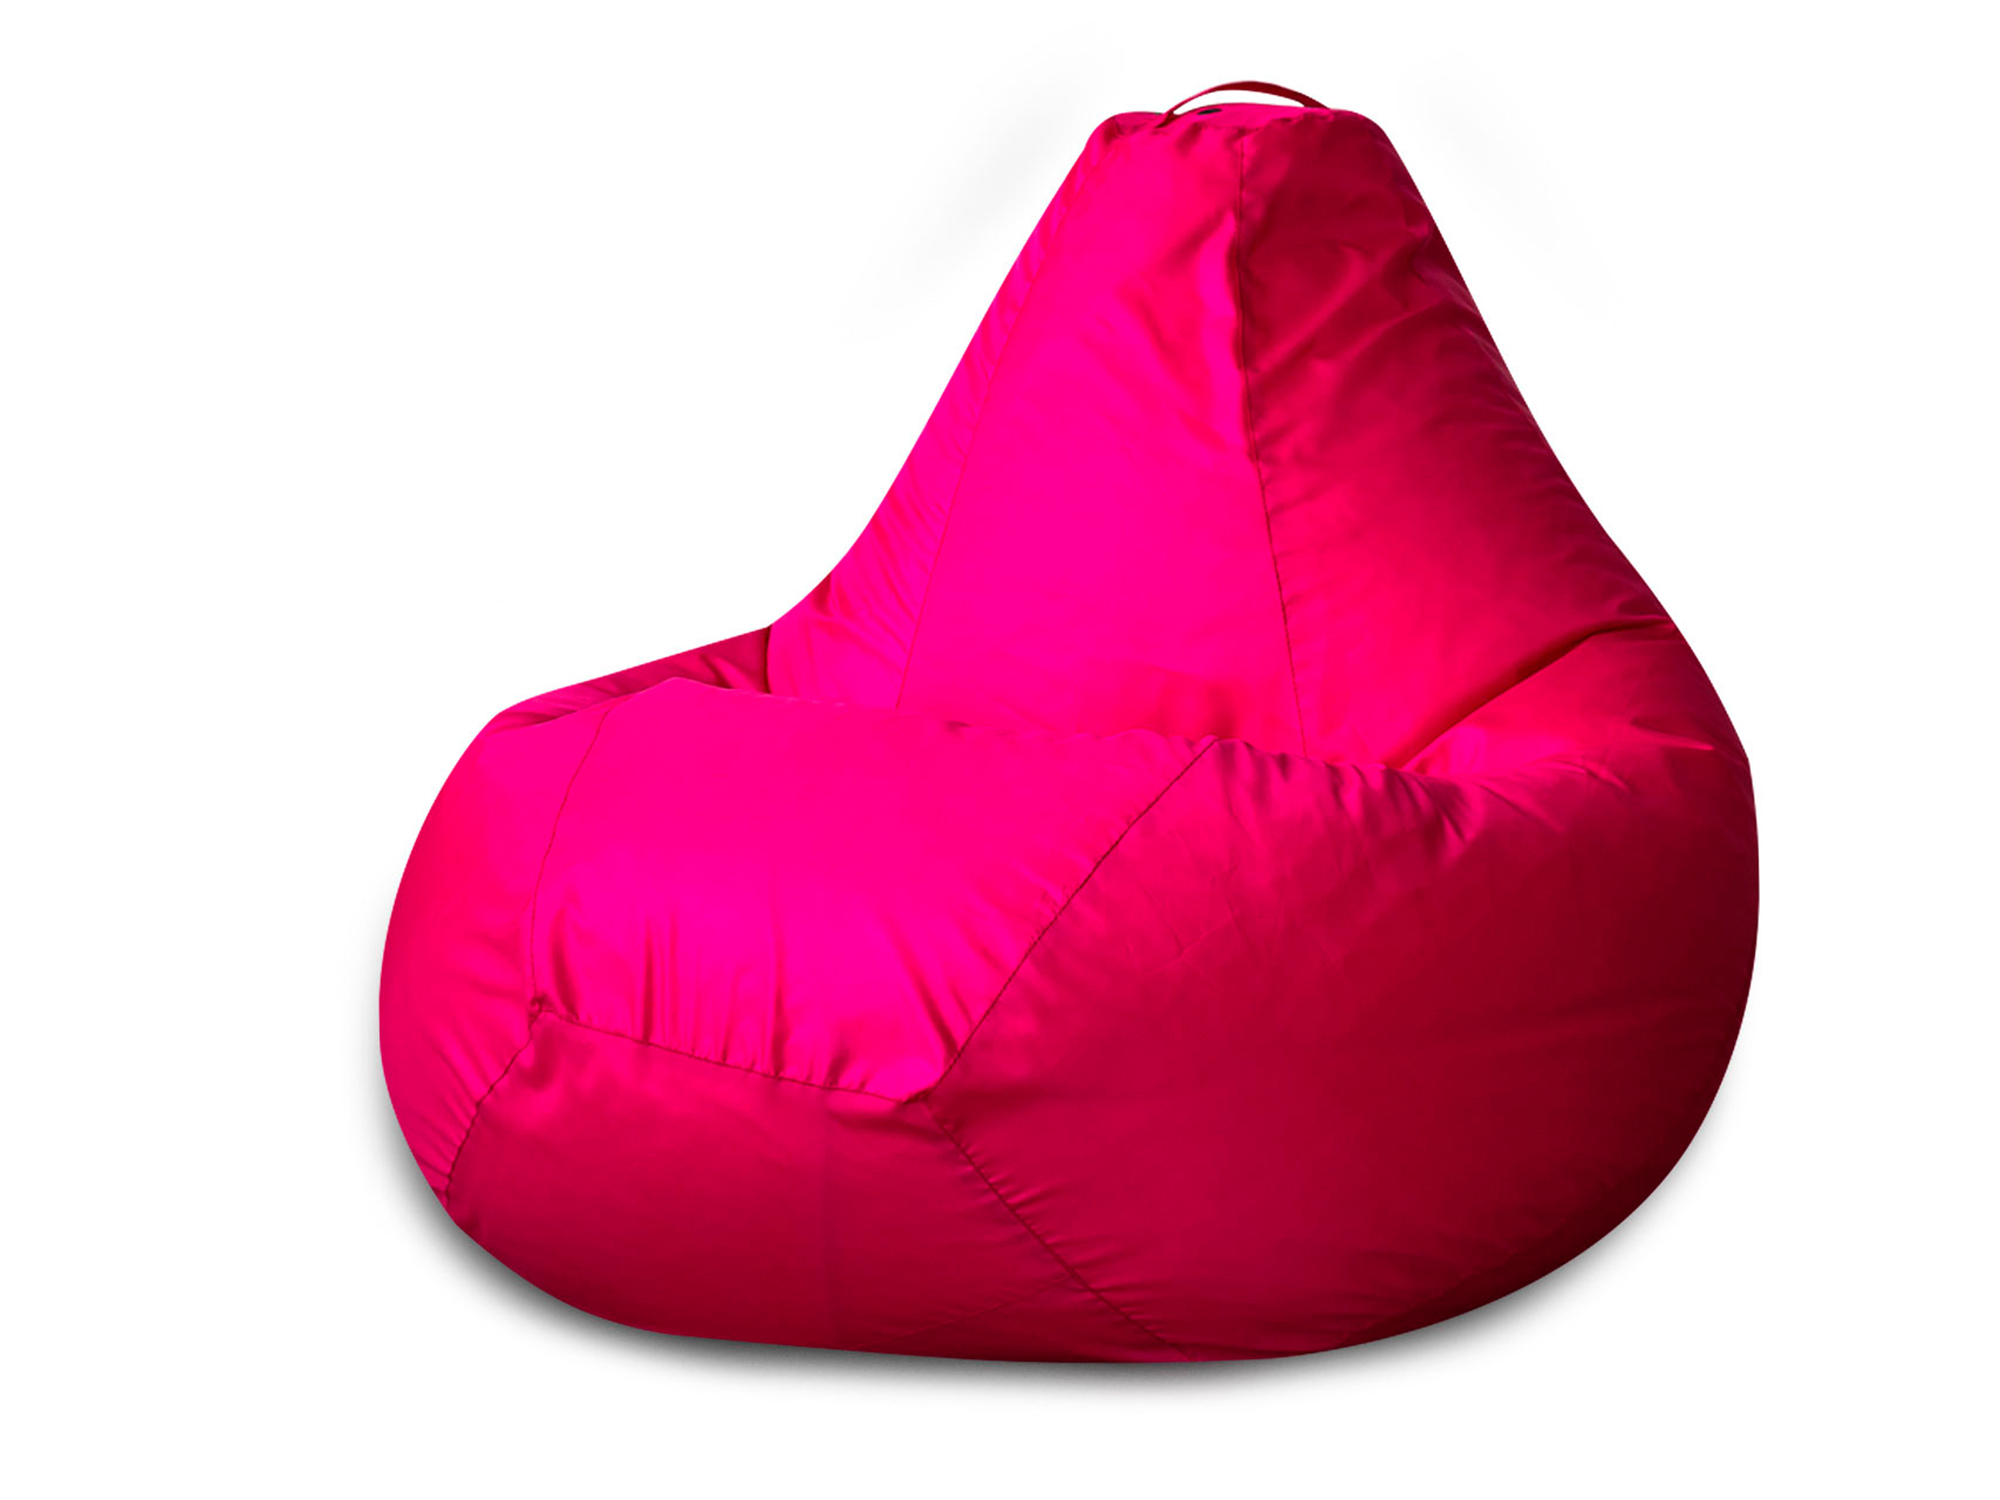 Кресло Мешок Розовое Оксфорд XL 125х85 MebelVia , Розовый, Оксфорд кресло мешок серое оксфорд xl 125х85 mebelvia серый оксфорд